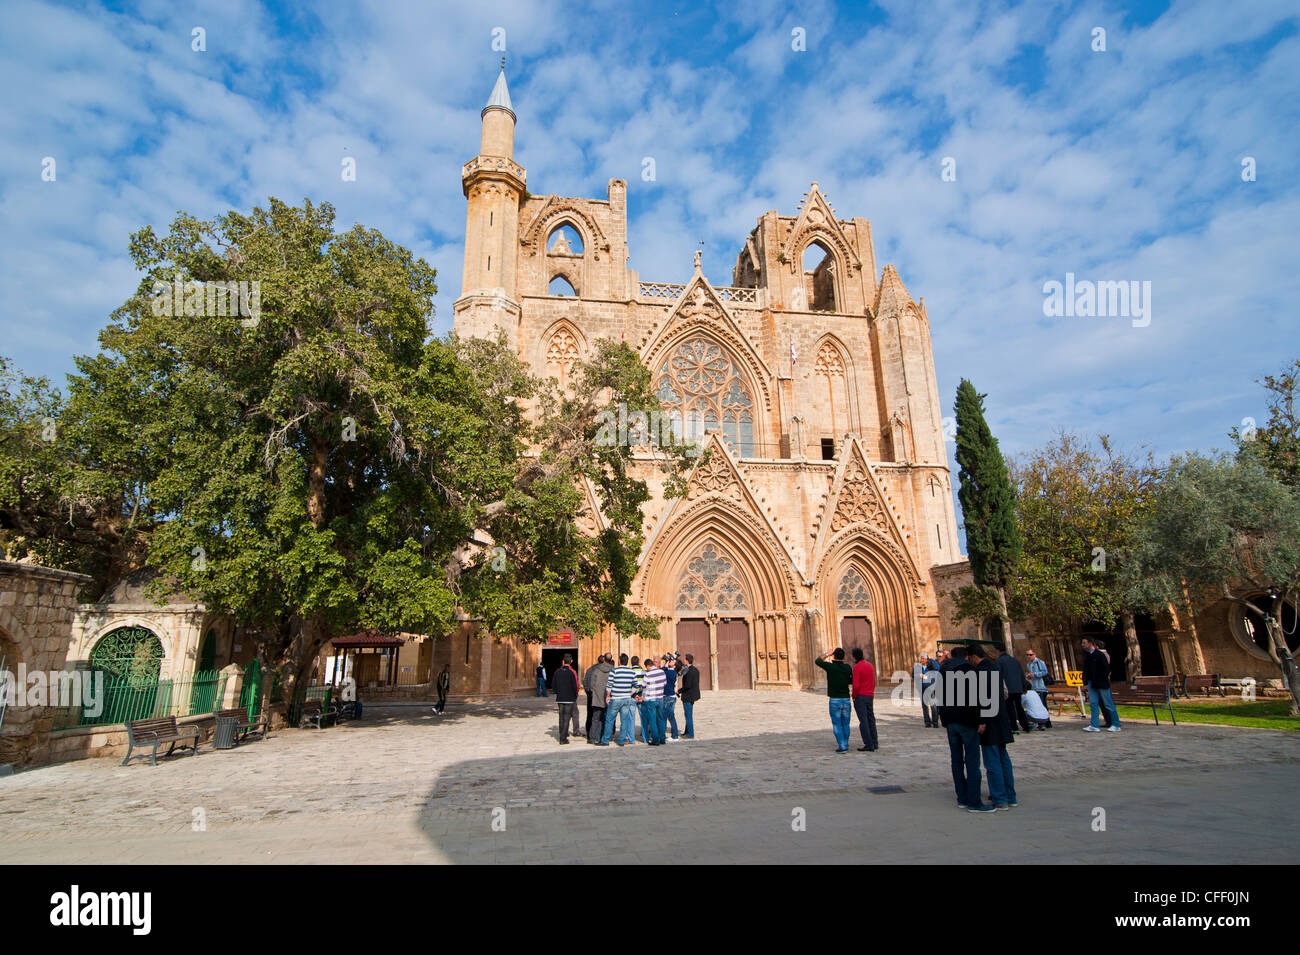 Lala Mustafa Pasa Moschee, Famagusta, türkischen Teil von Zypern, Europa Stockfoto